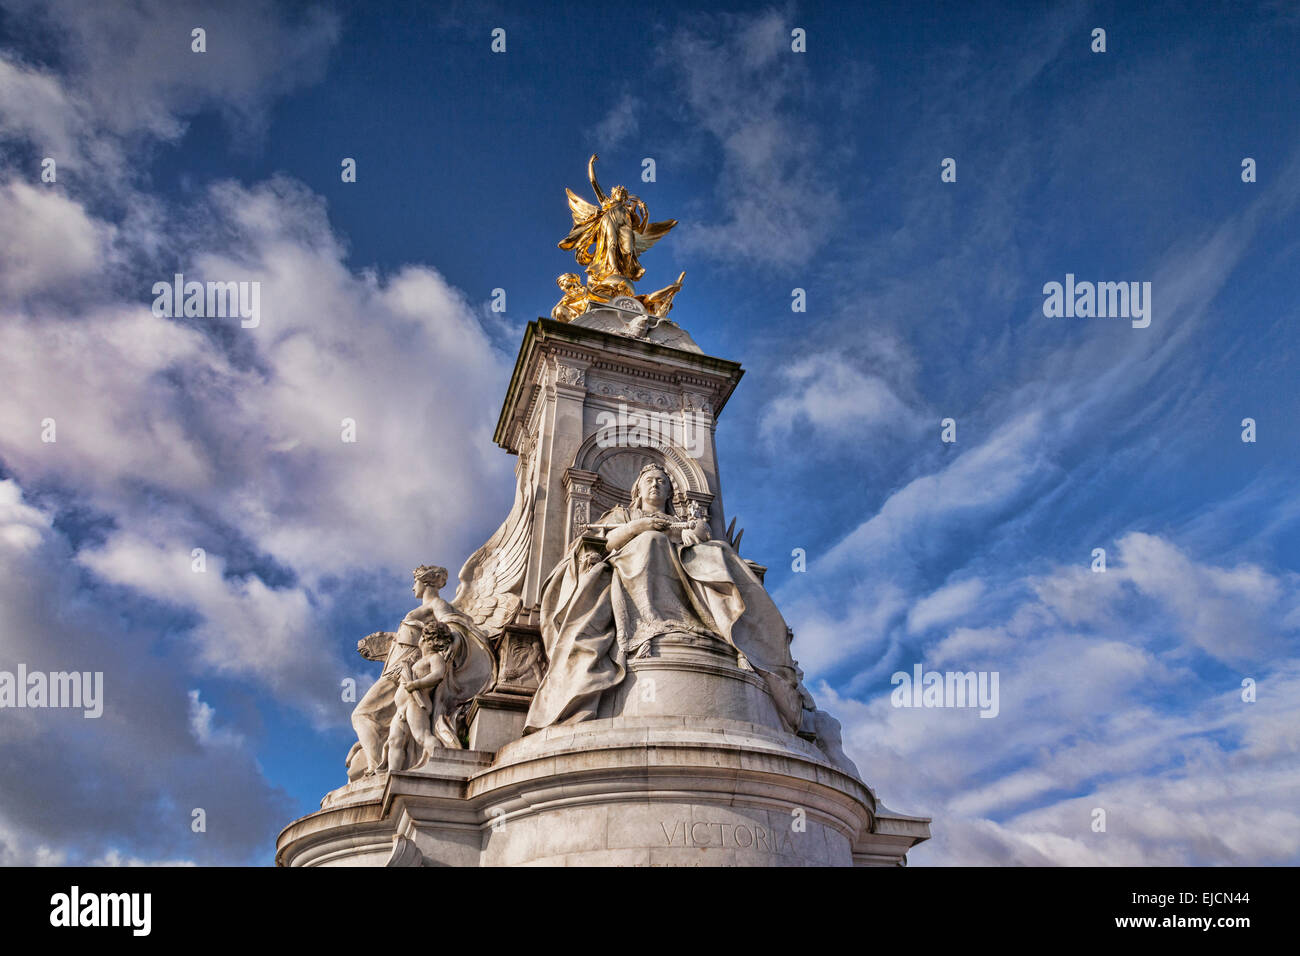 Victoria Memorial, The Mall, London, England. Stock Photo